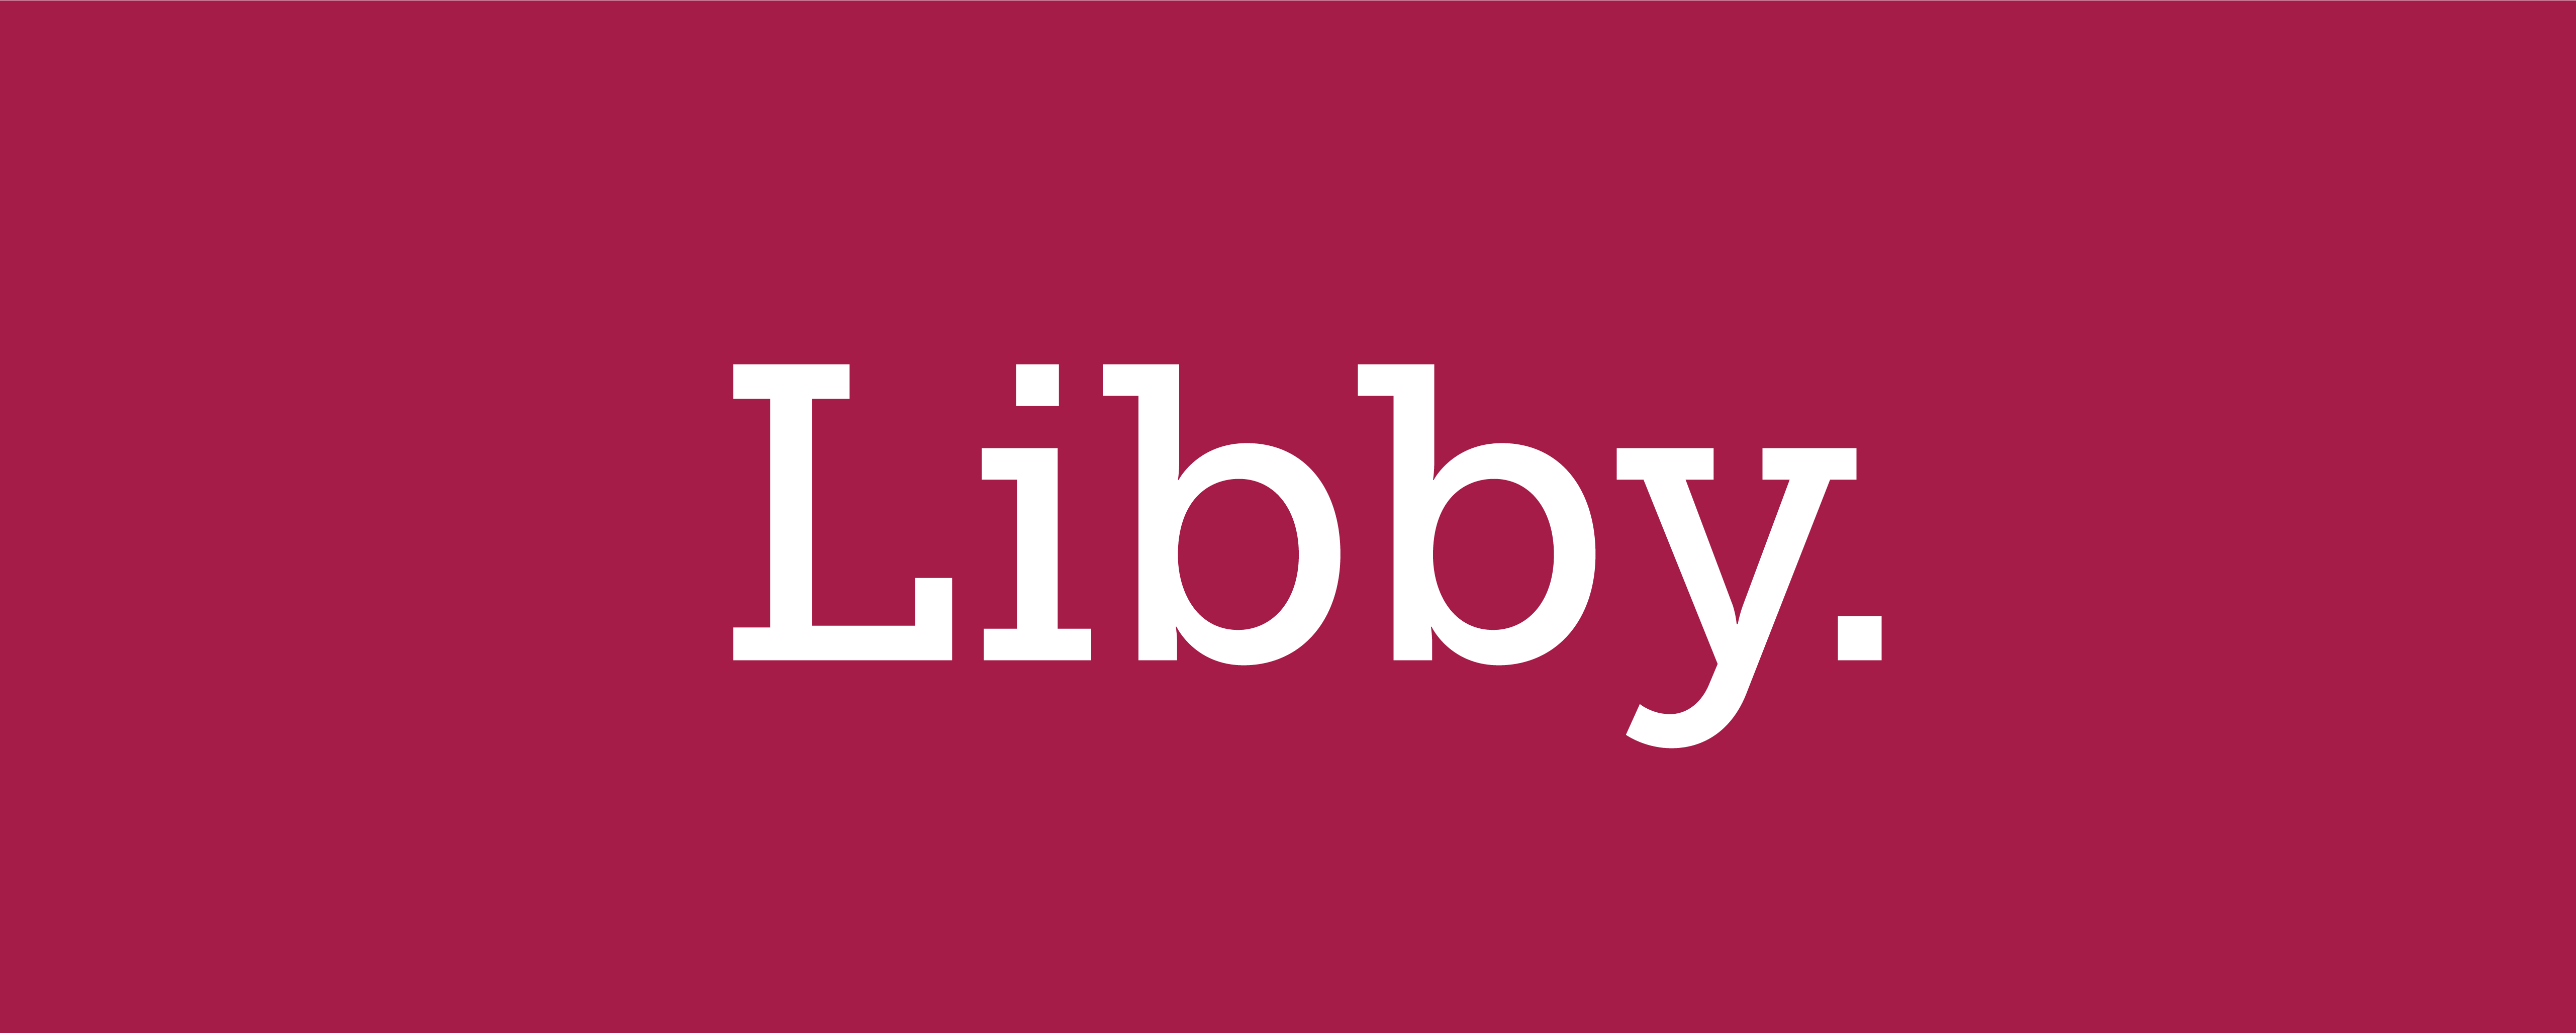 Libby Wordmark